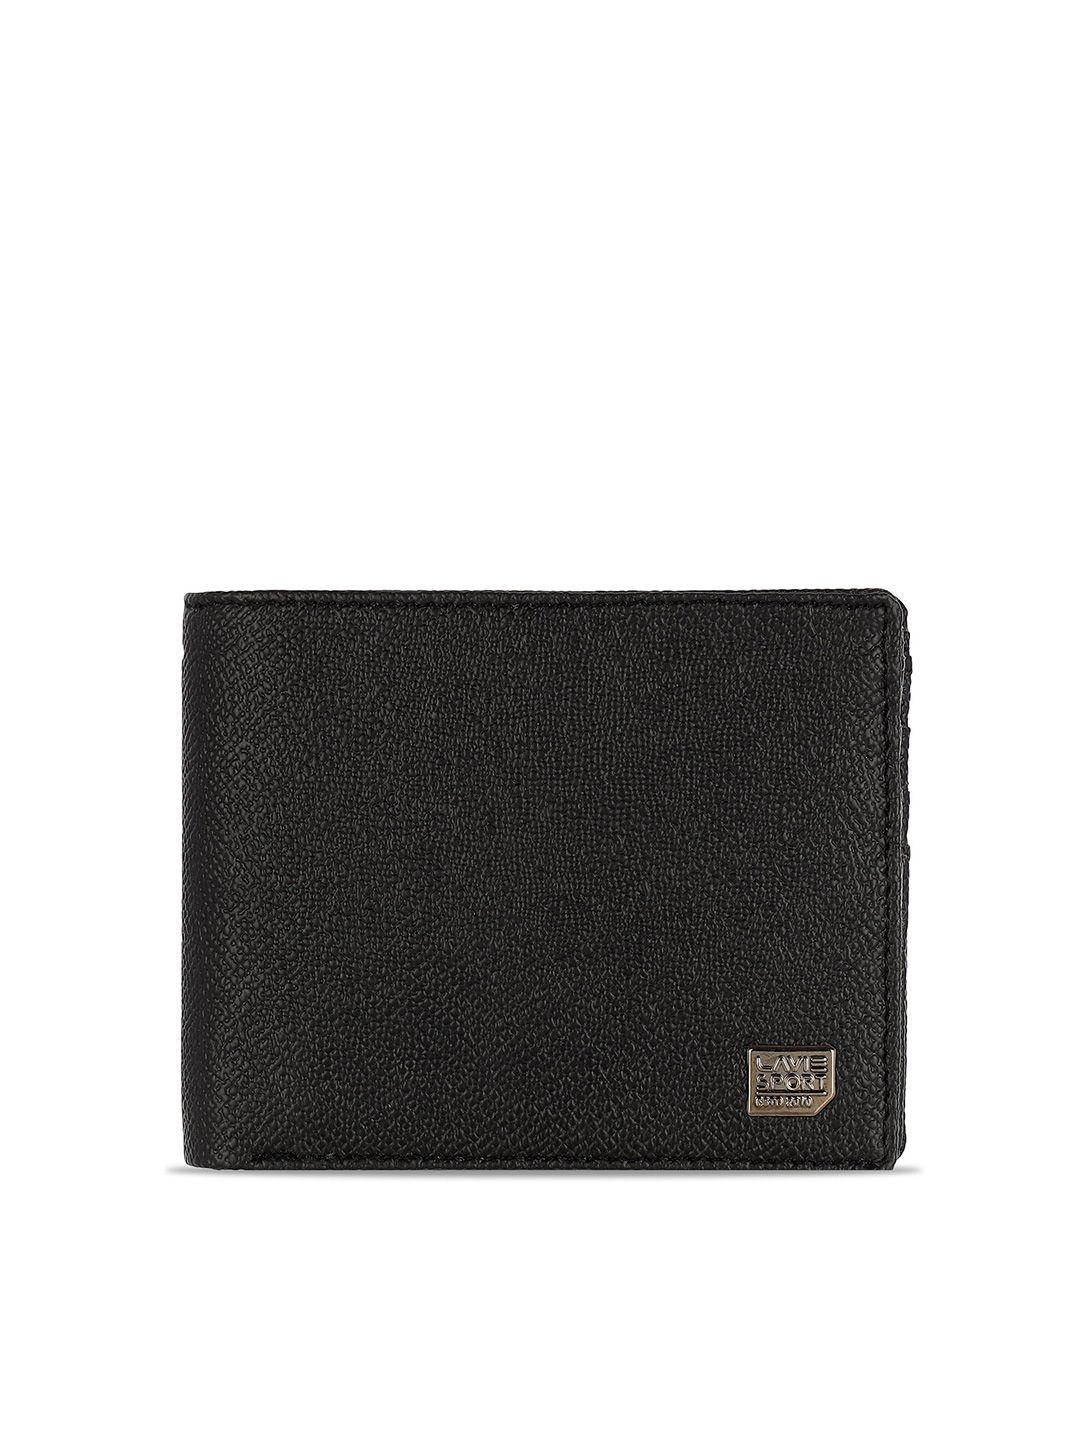 lavie sport men two fold wallet with sim card holder